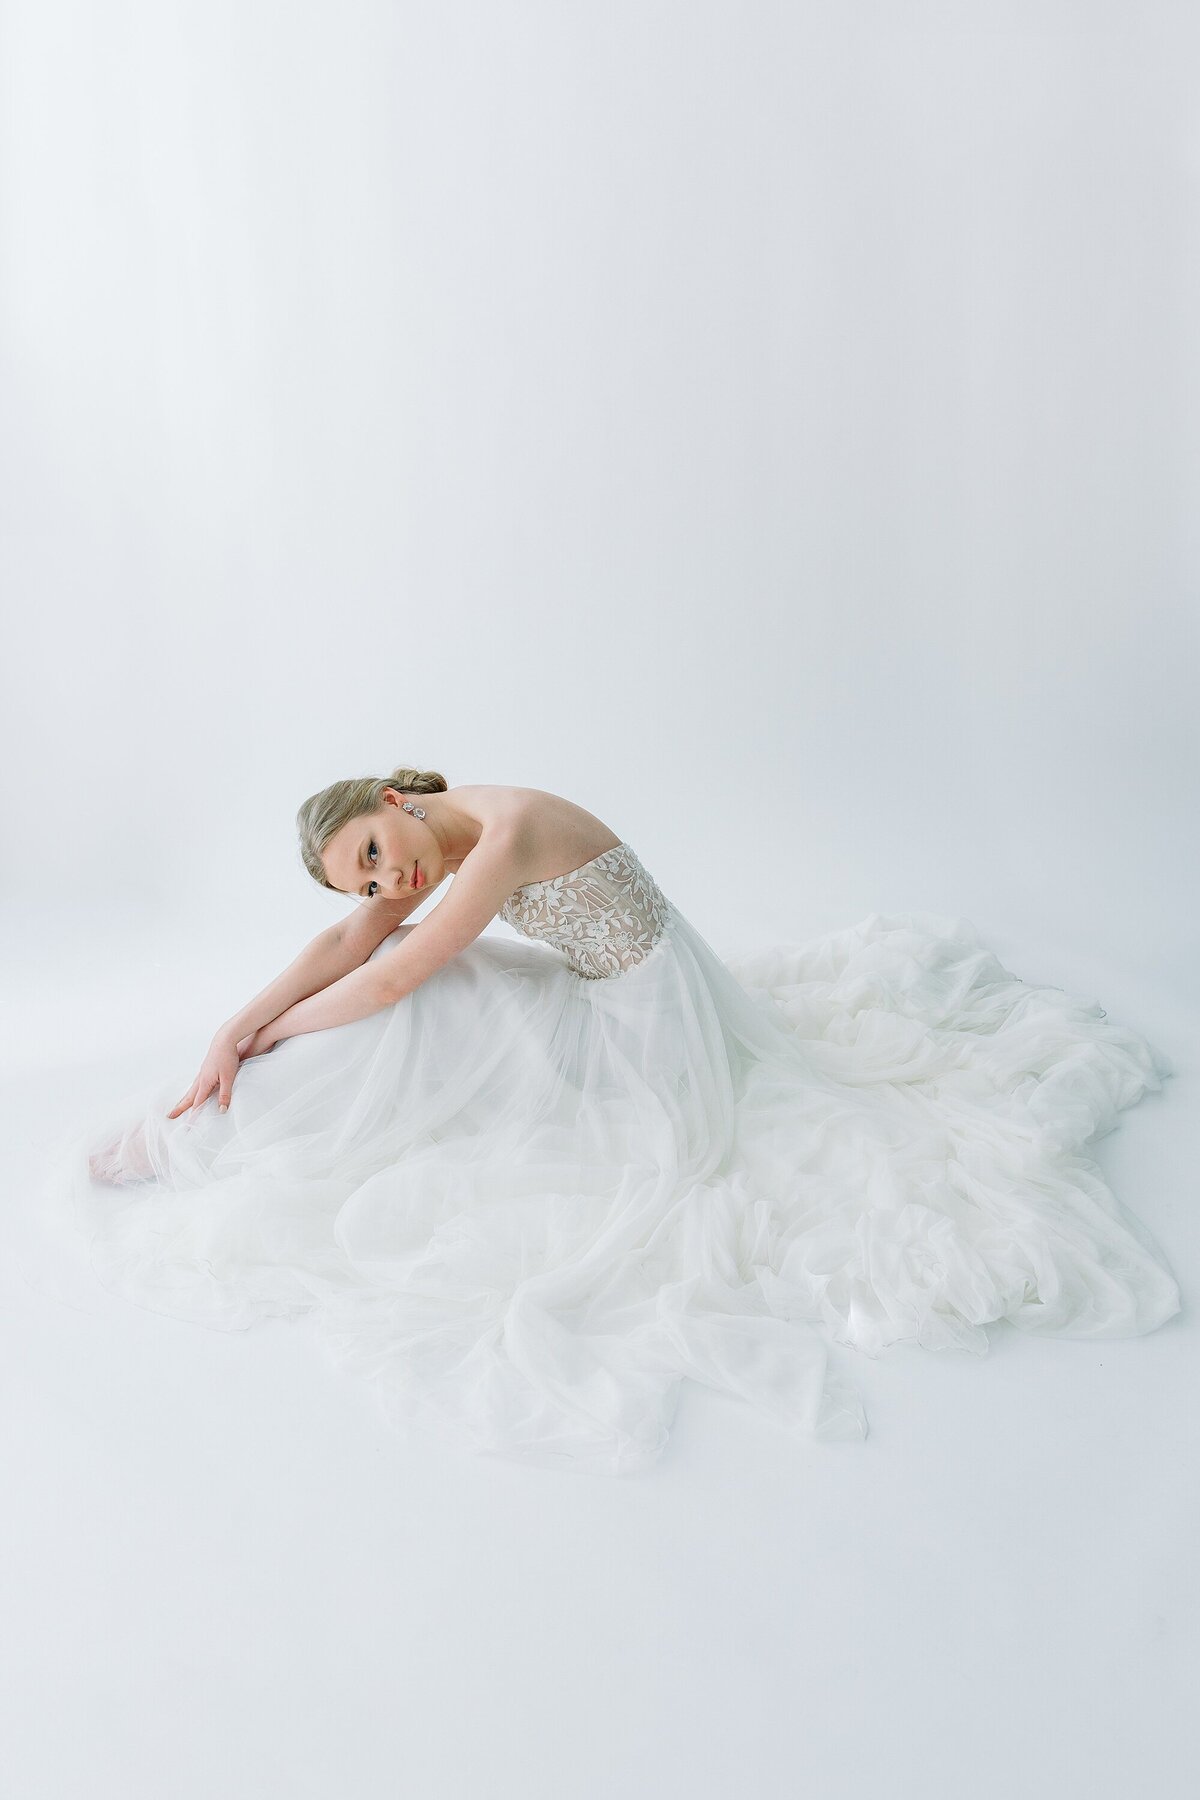 20200225 Bridal Editorial Shoot_Bethany Picone Photography-434